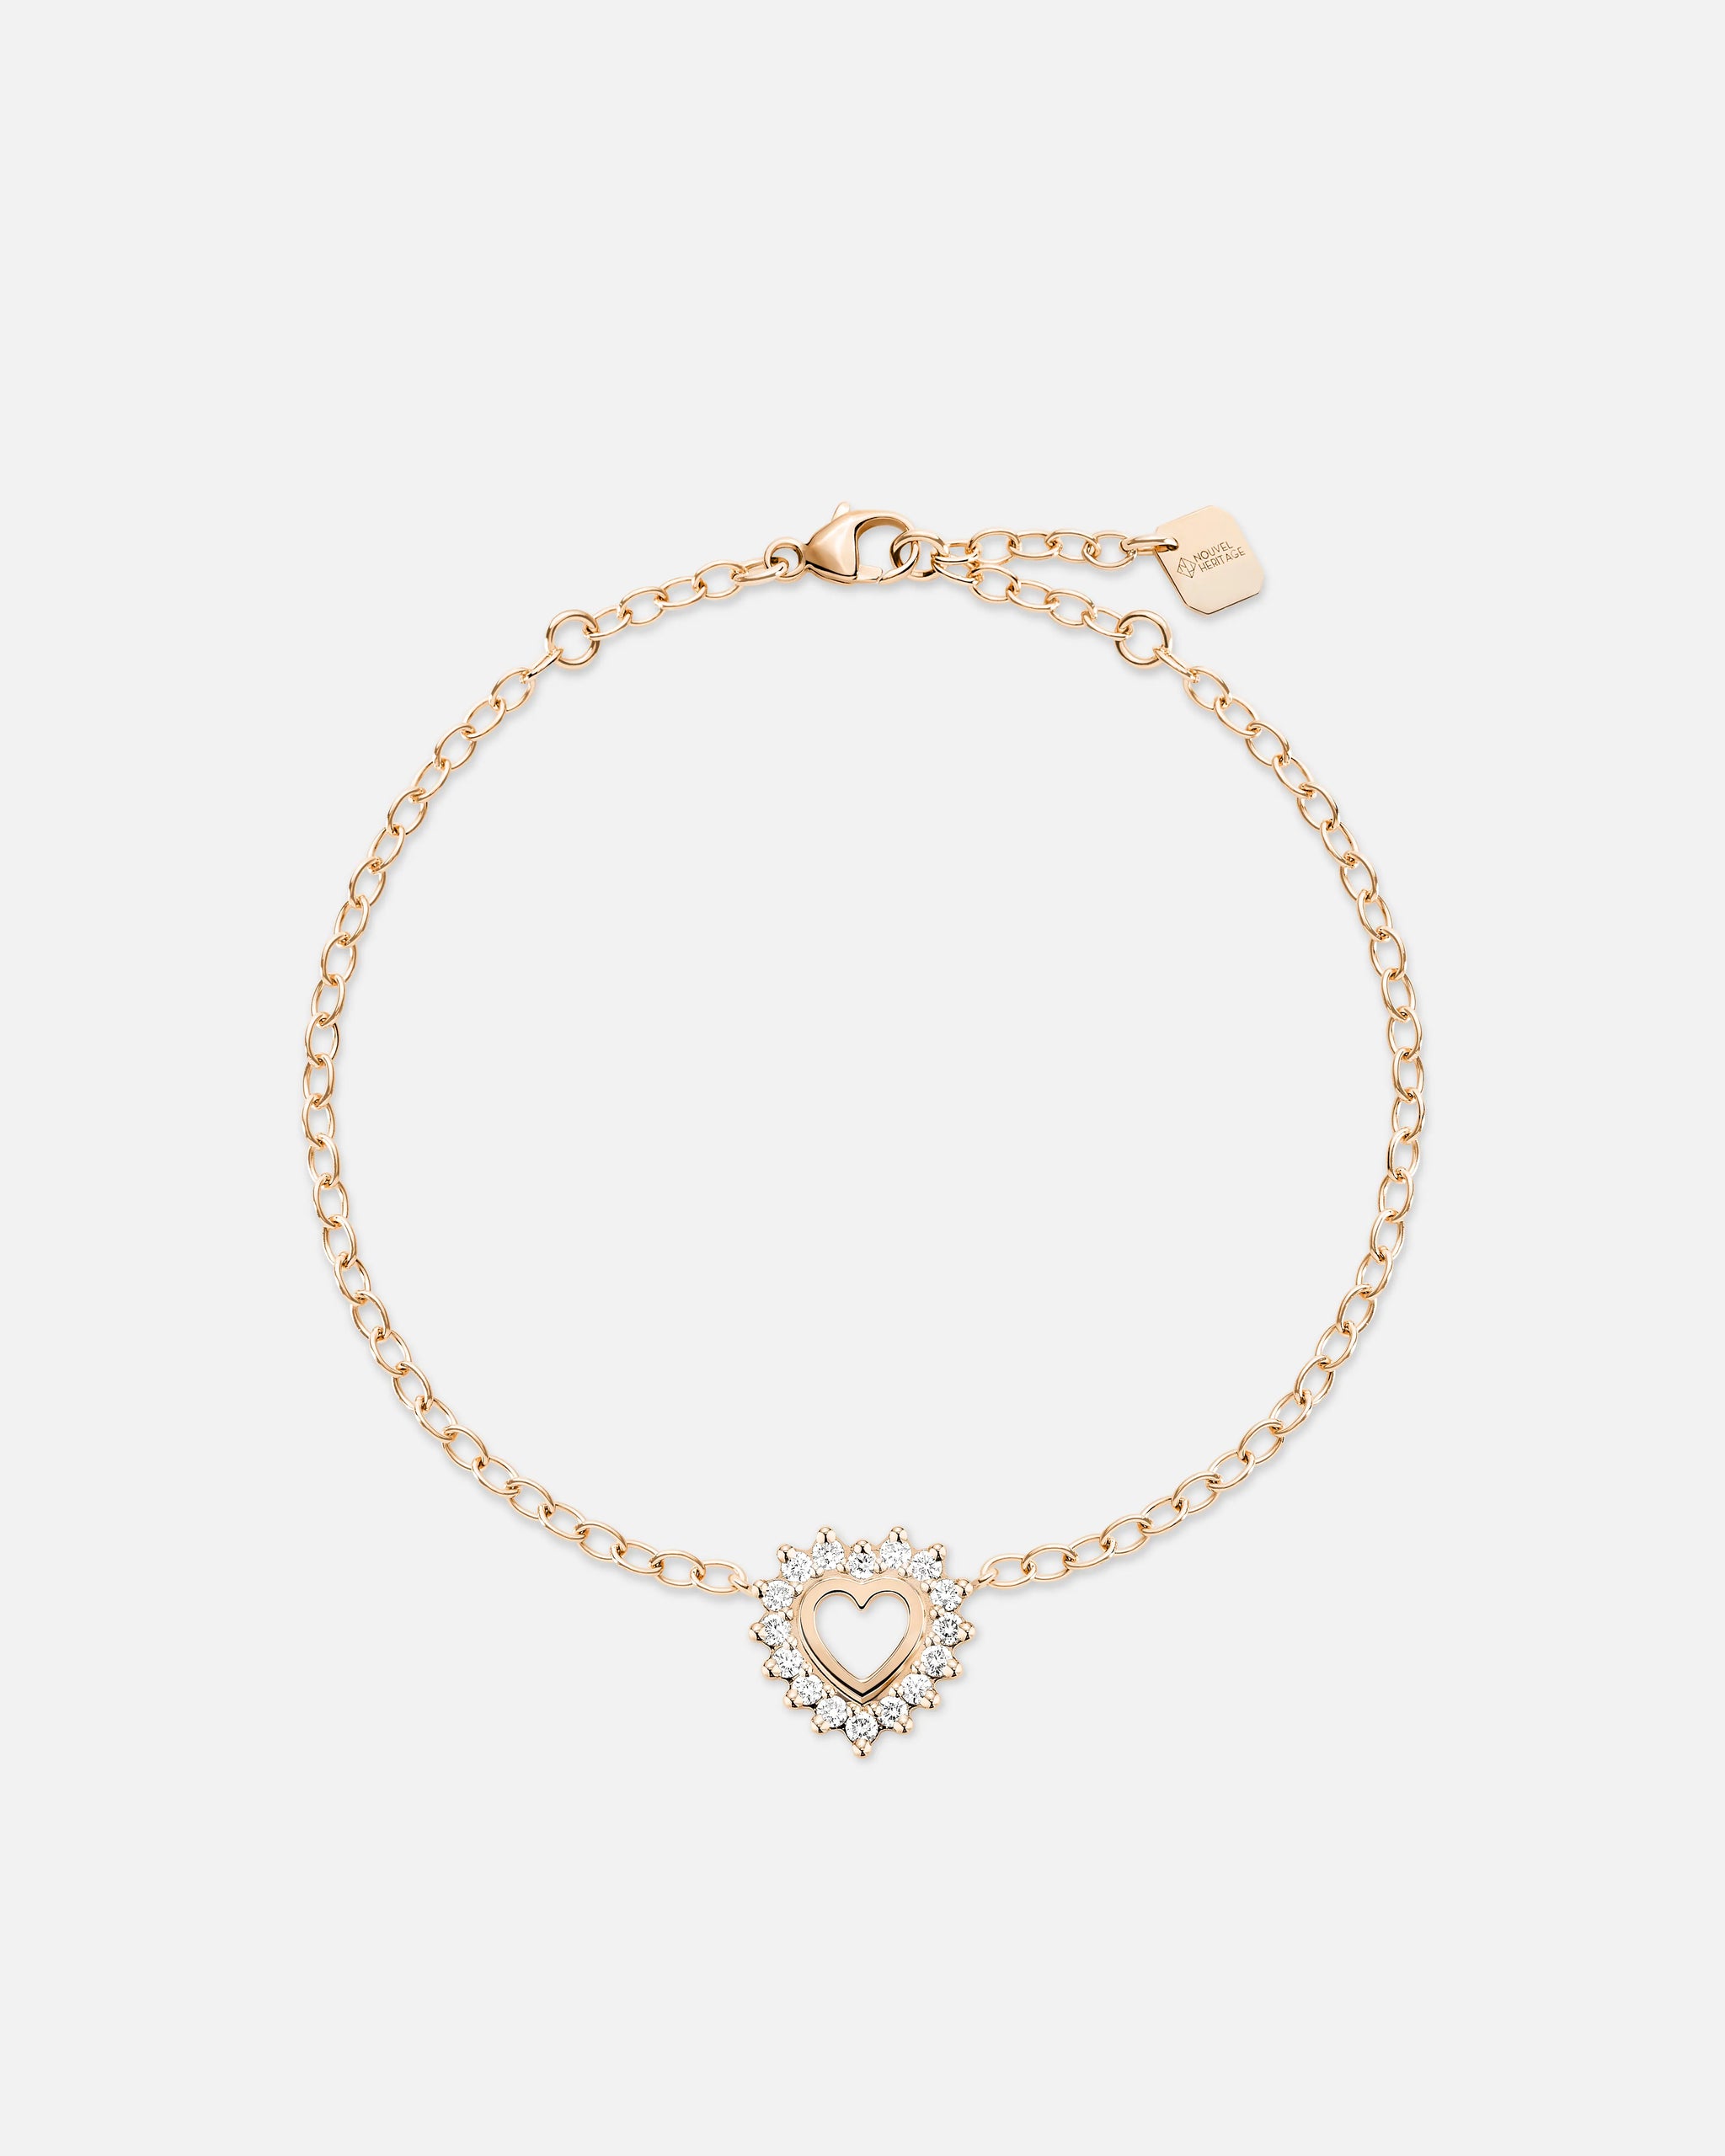 Medium Love Bracelet in Rose Gold - 1 - Nouvel Heritage